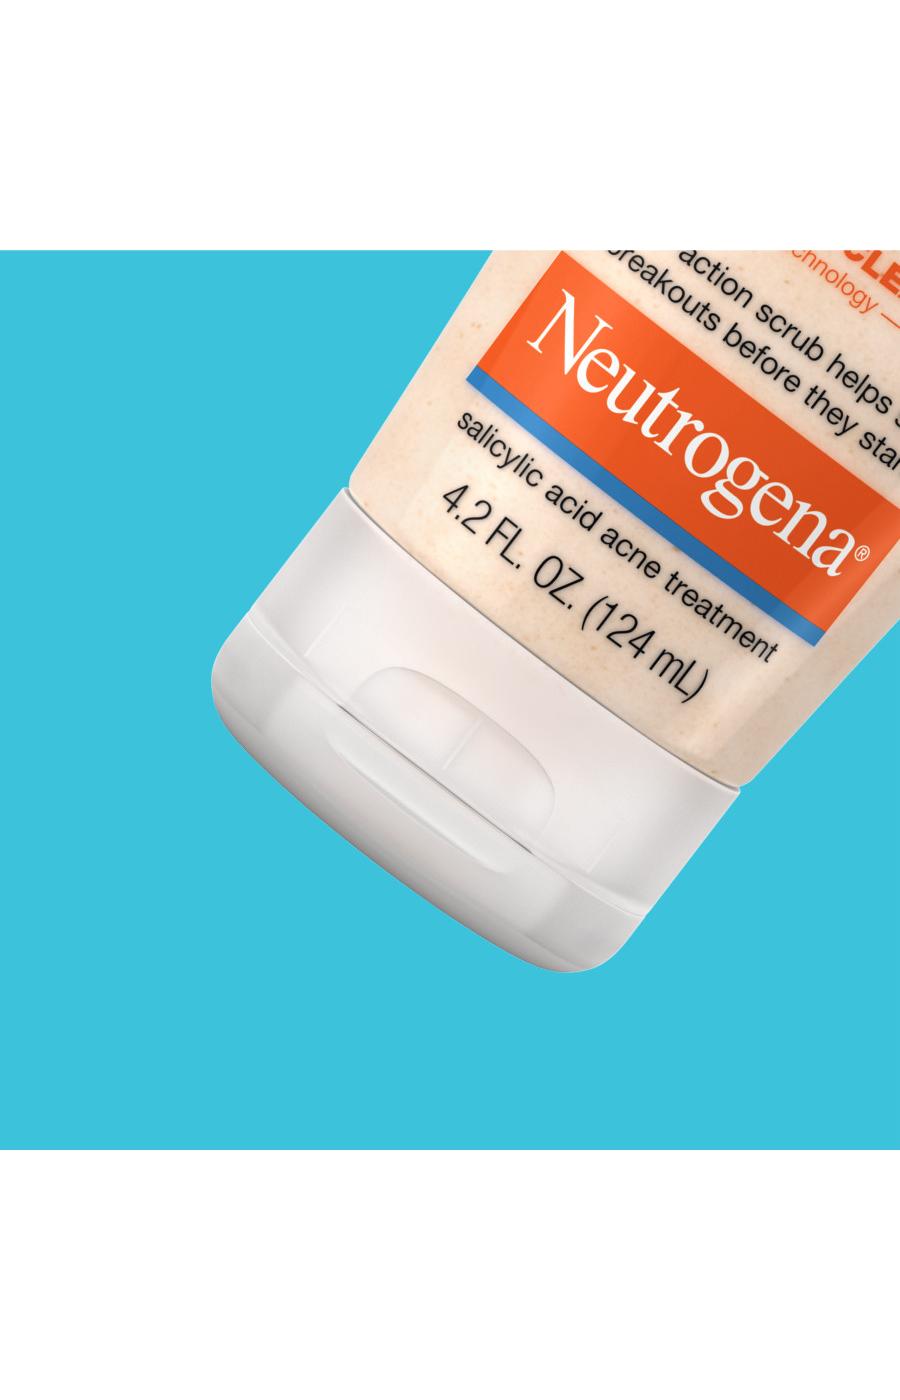 Neutrogena Oil-Free Acne Wash Daily Scrub; image 4 of 8